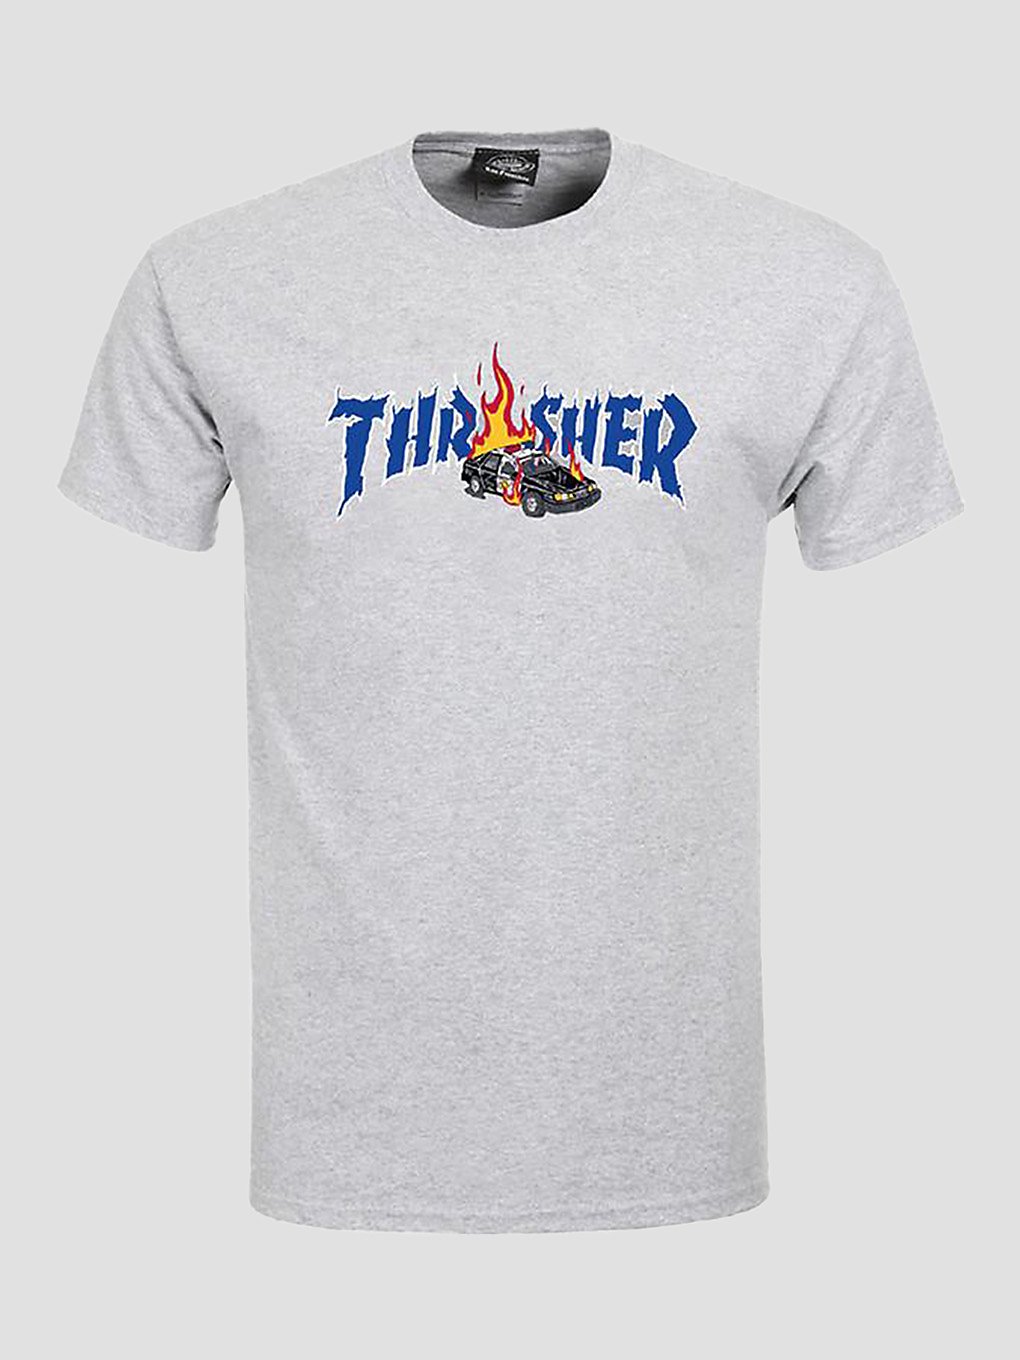 Thrasher Cop Car T-Shirt grey kaufen